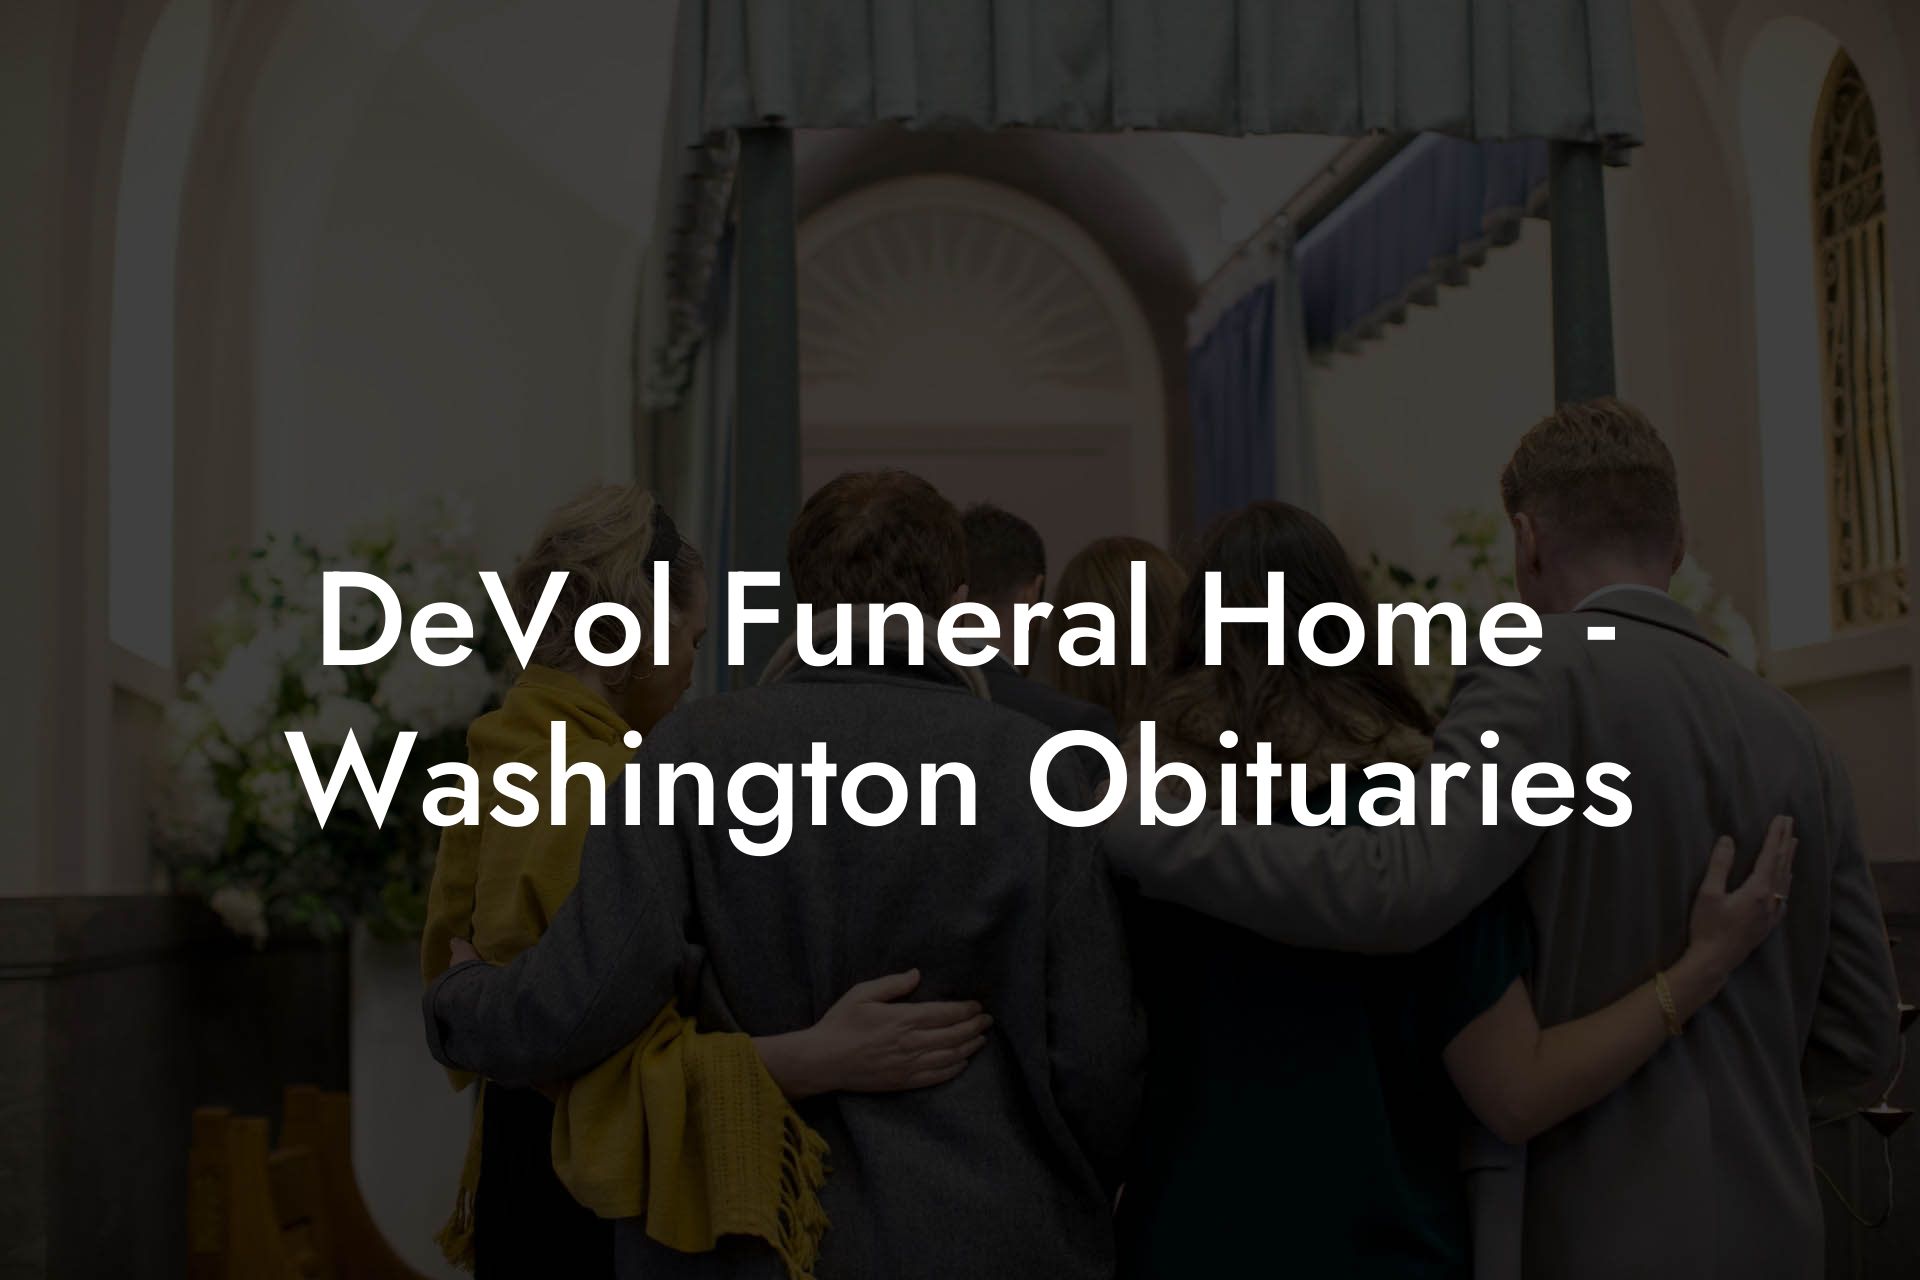 DeVol Funeral Home - Washington Obituaries